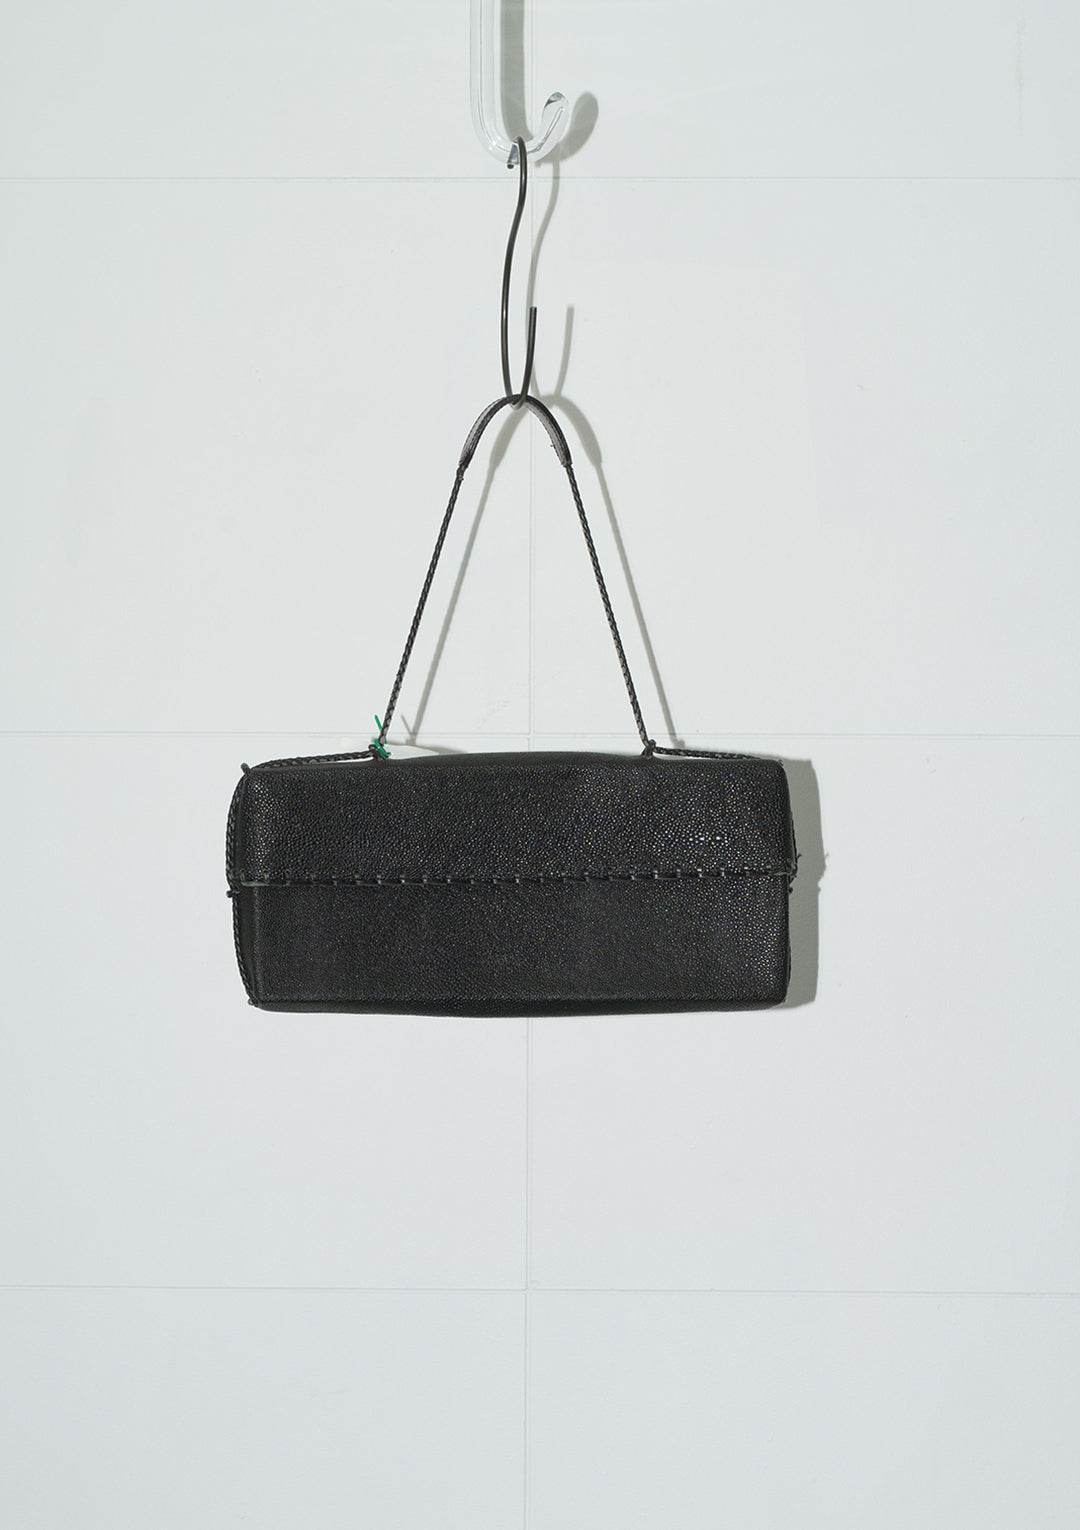 Jean Paul Gaultier Vintage 2000s Leather Bag Rare